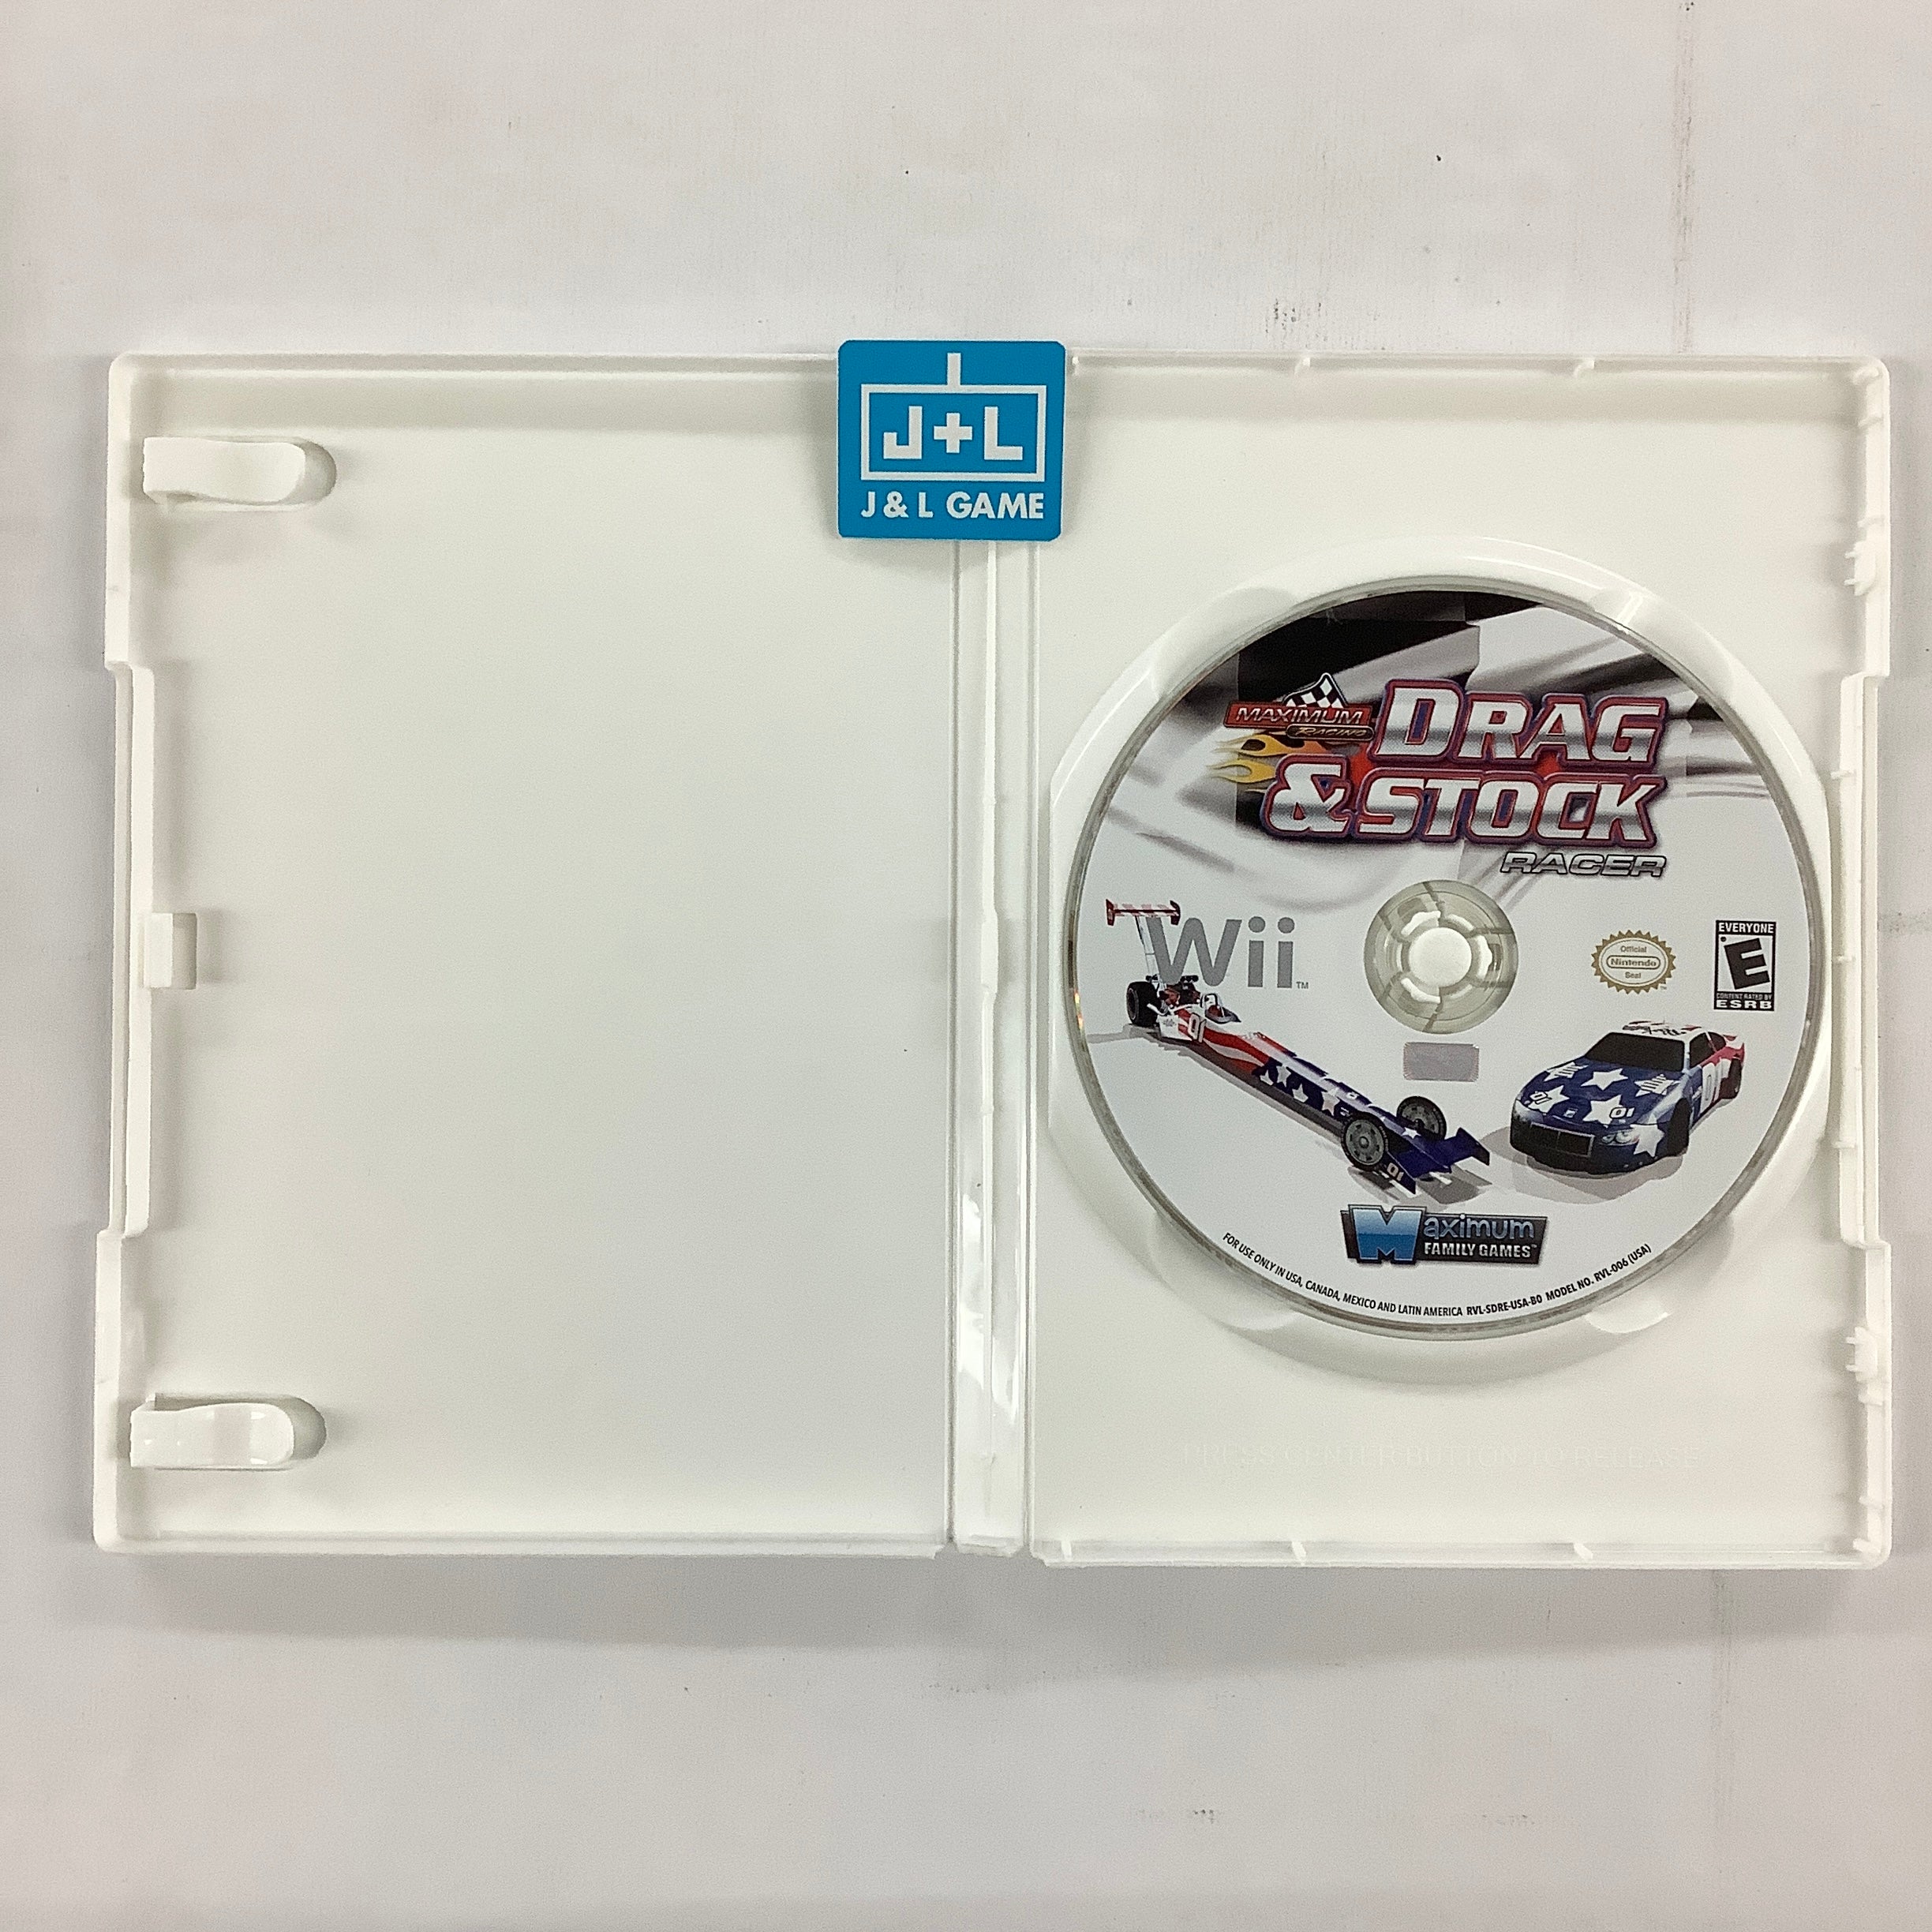 Maximum Racing: Drag & Stock Racer - Nintendo Wii [Pre-Owned] Video Games Maximum Family Games   